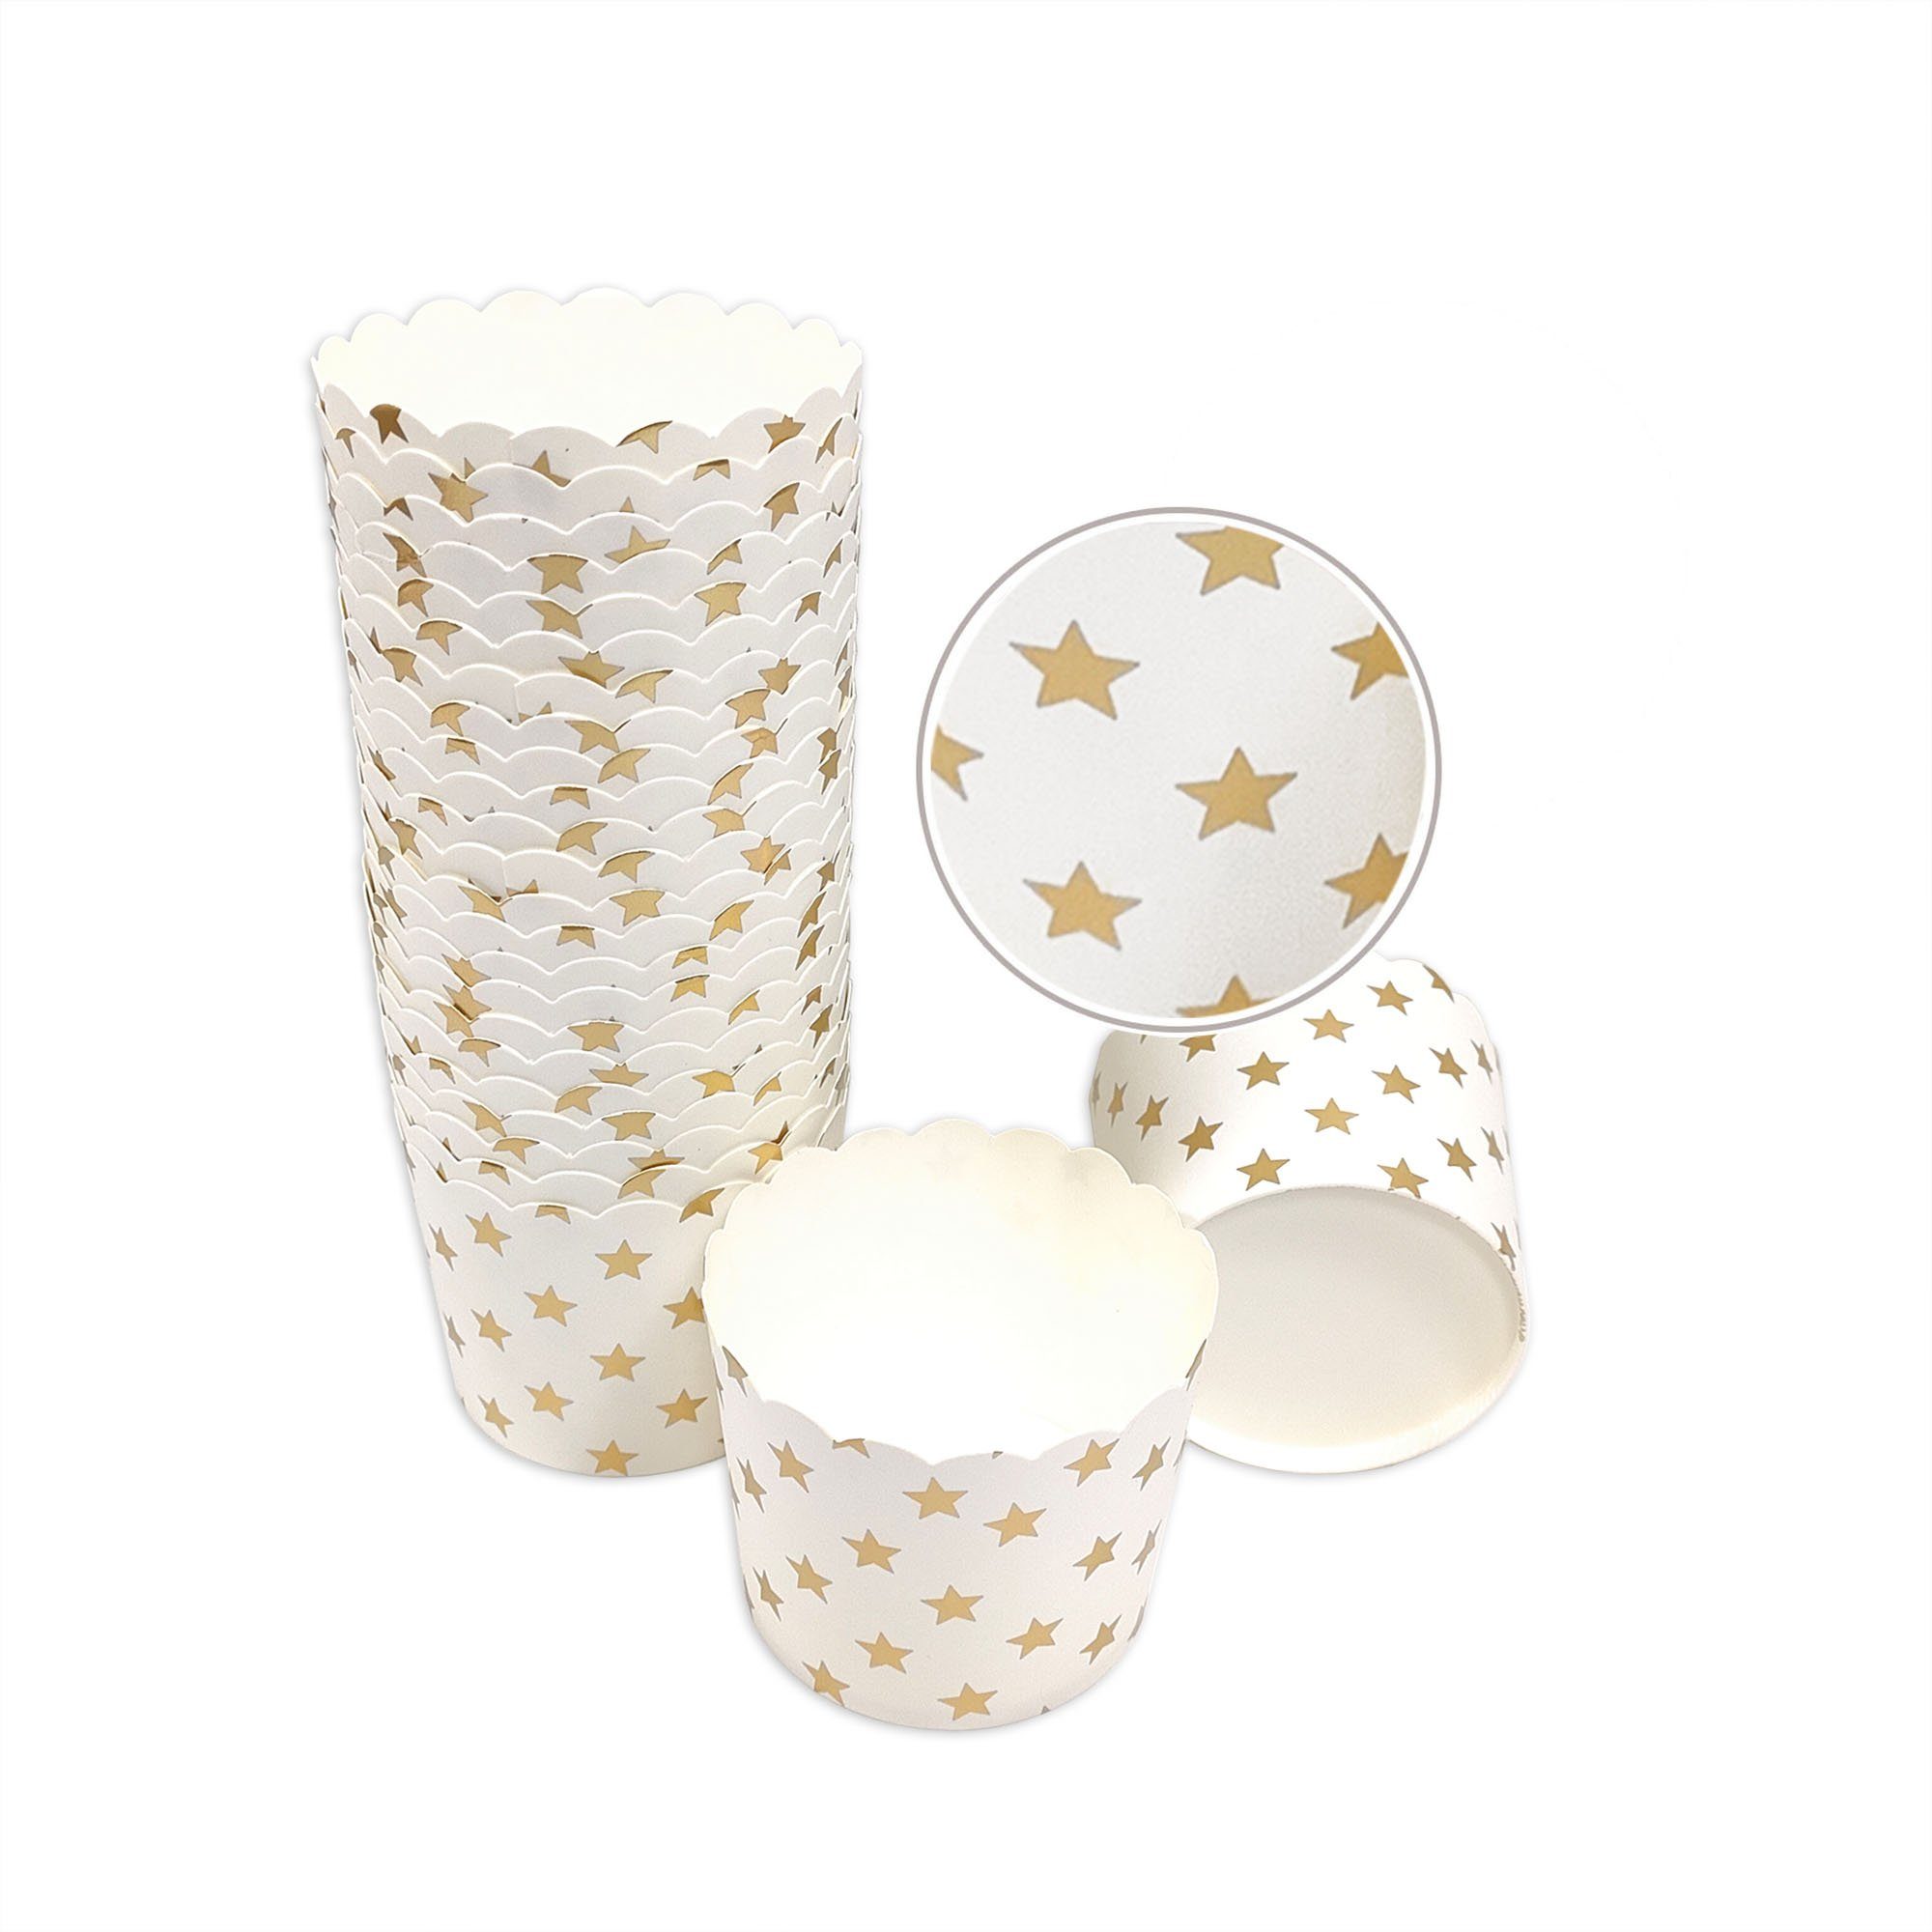 Frau WUNDERVoll Muffinform Muffin Backformen, groß Durchmesser 6,1 cm, weiße goldene Sterne, (25-tlg)